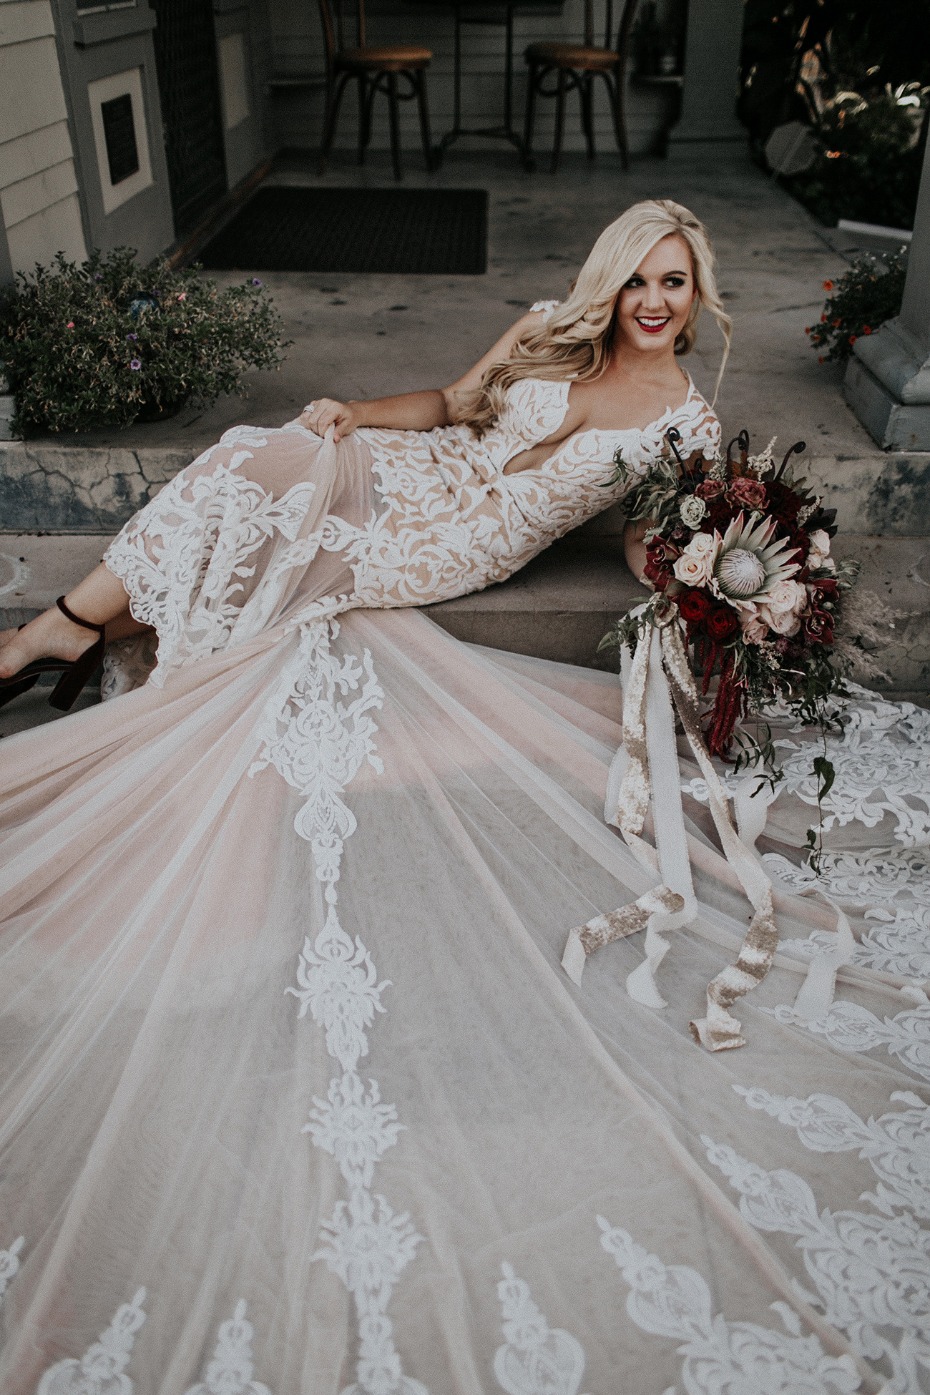 Stunning Calla Blanche wedding dress